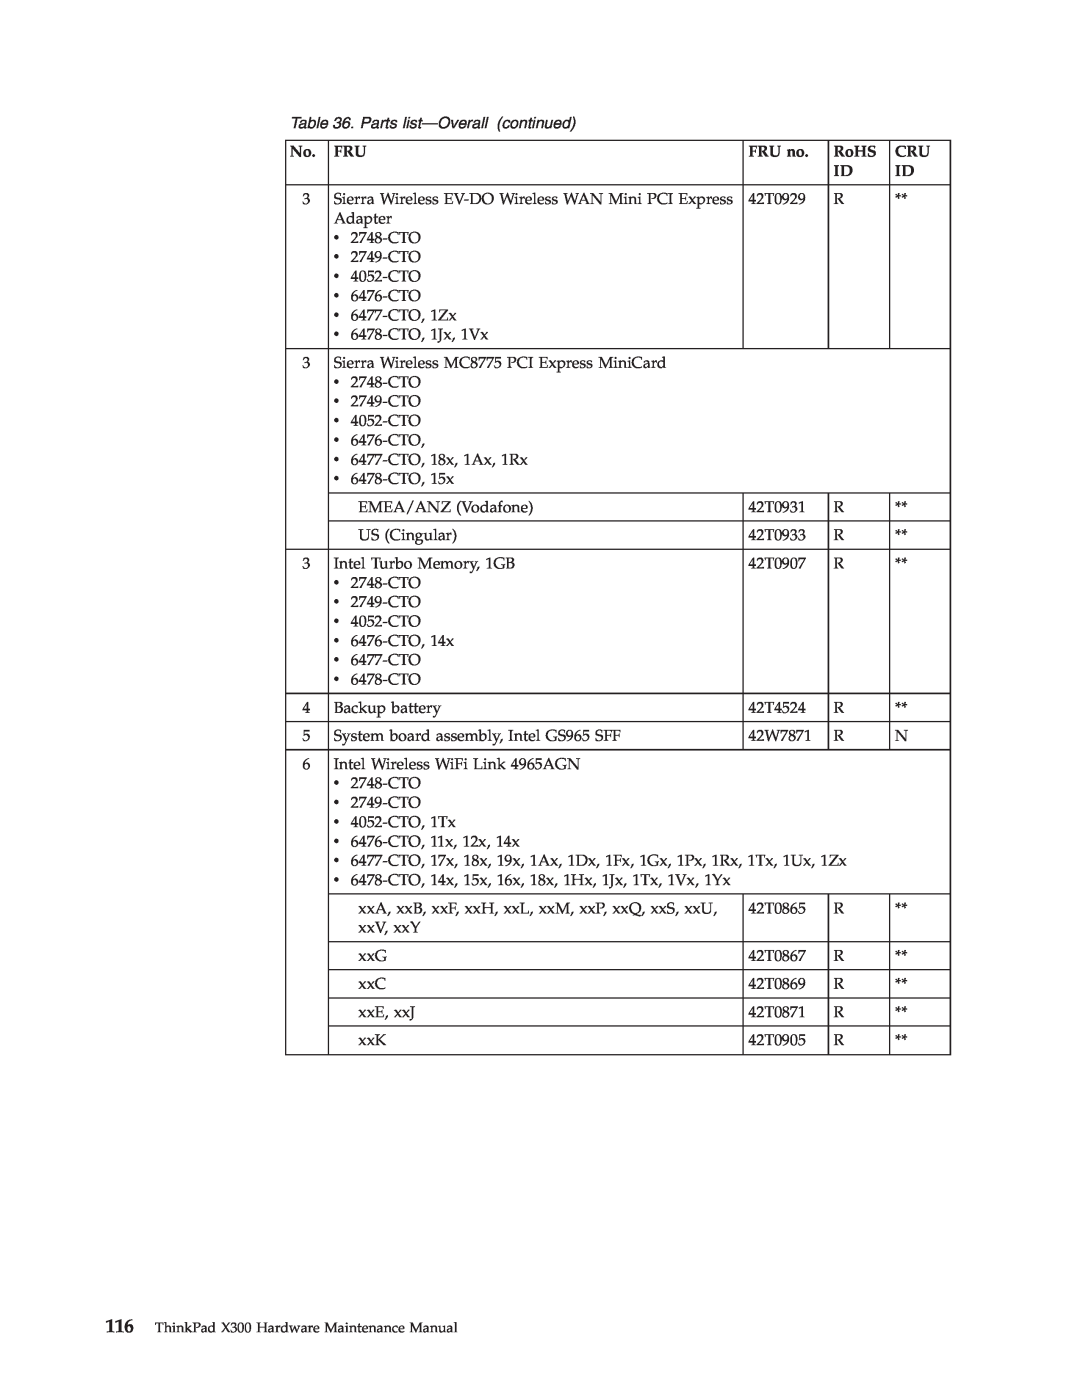 Lenovo manual Parts list-Overall continued, ThinkPad X300 Hardware Maintenance Manual 